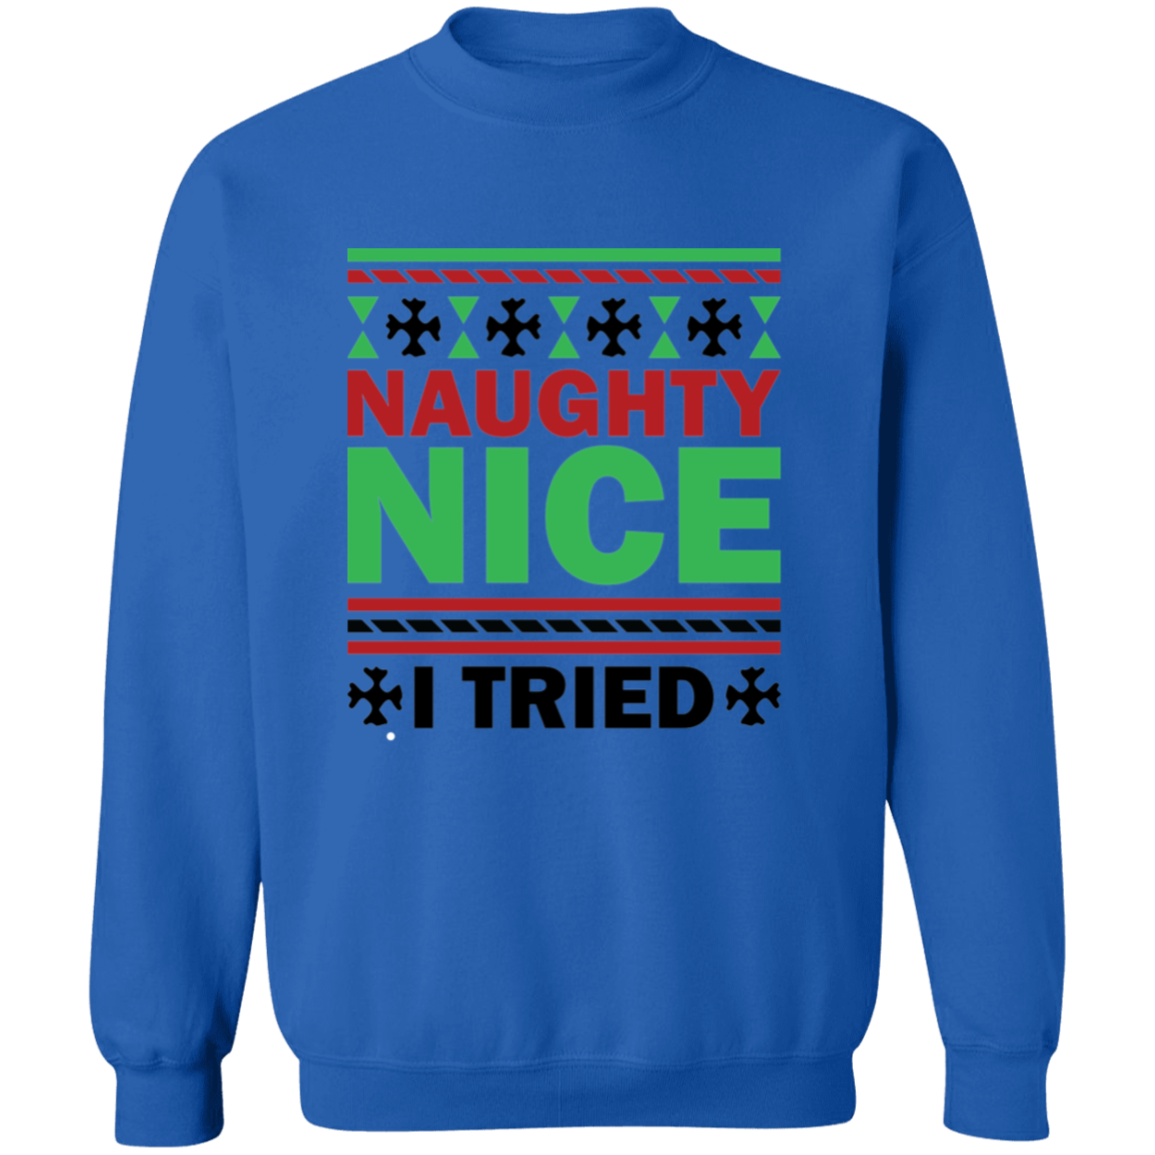 Naughty Nice I Tried! [Crewneck Sweatshirt]